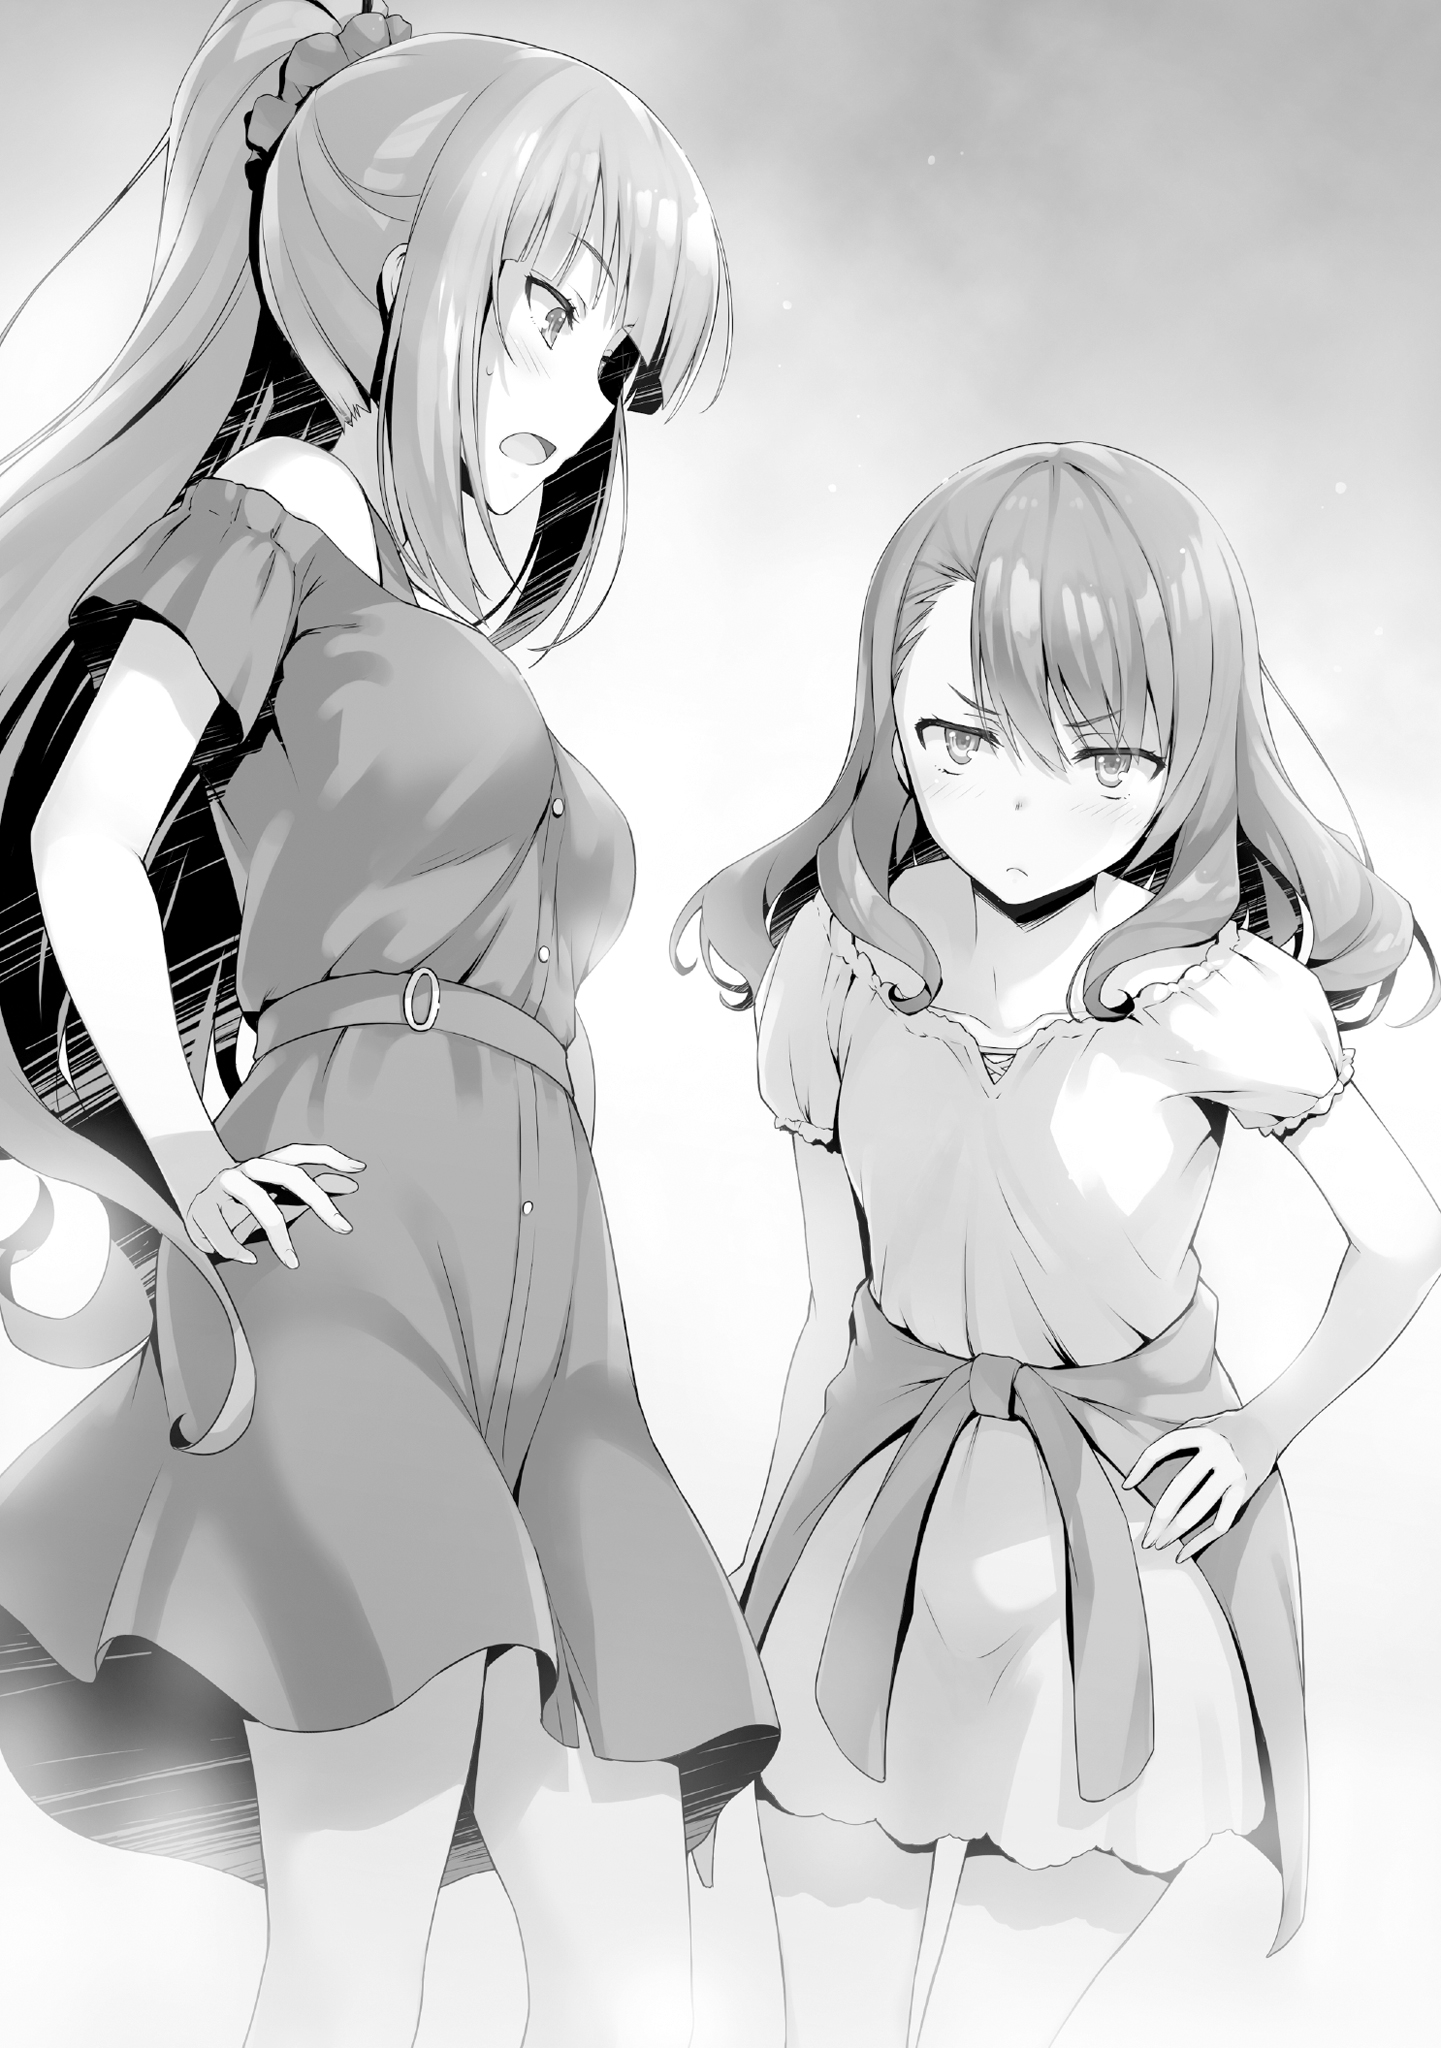 kei karuizawa x Kiyotaka Ayanokōji relationship development in light novel  